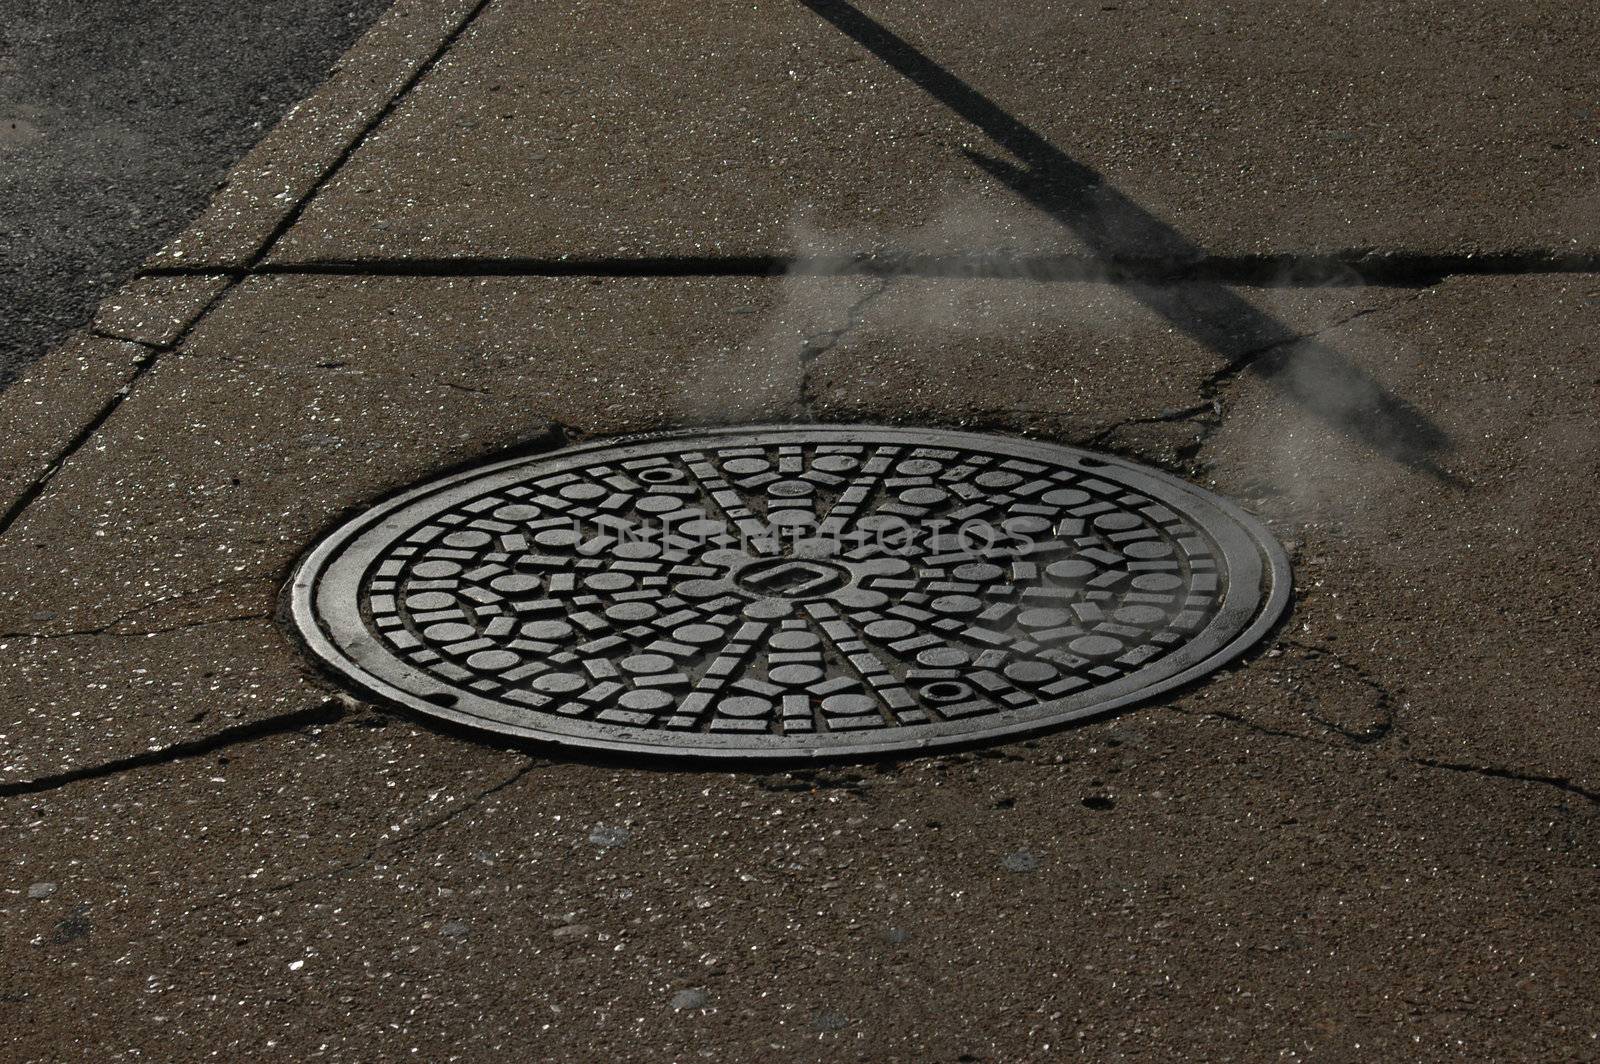 Manhole cover by northwoodsphoto